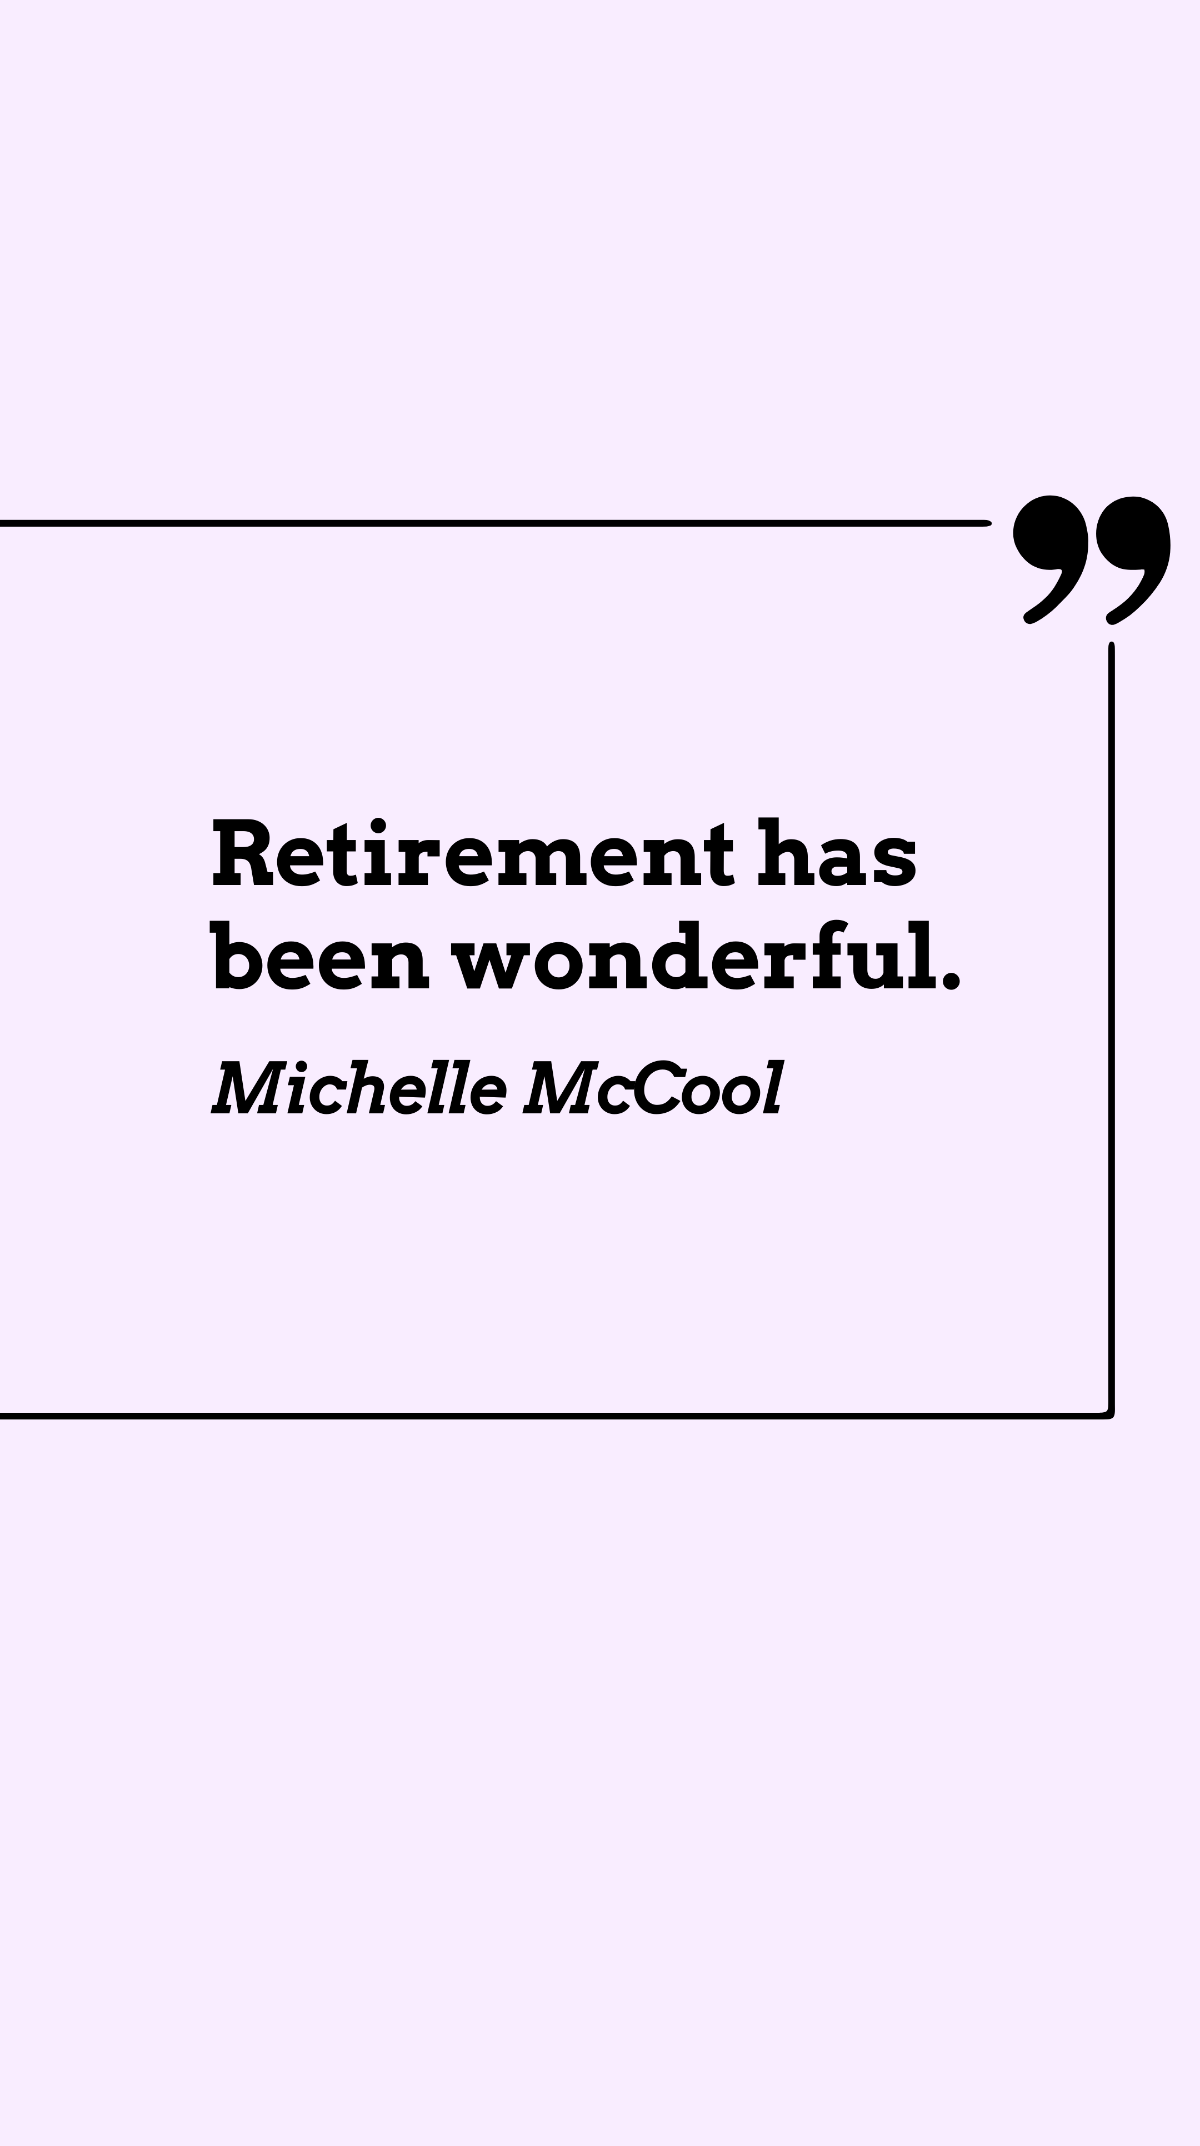 Michelle McCool - Retirement has been wonderful. Template